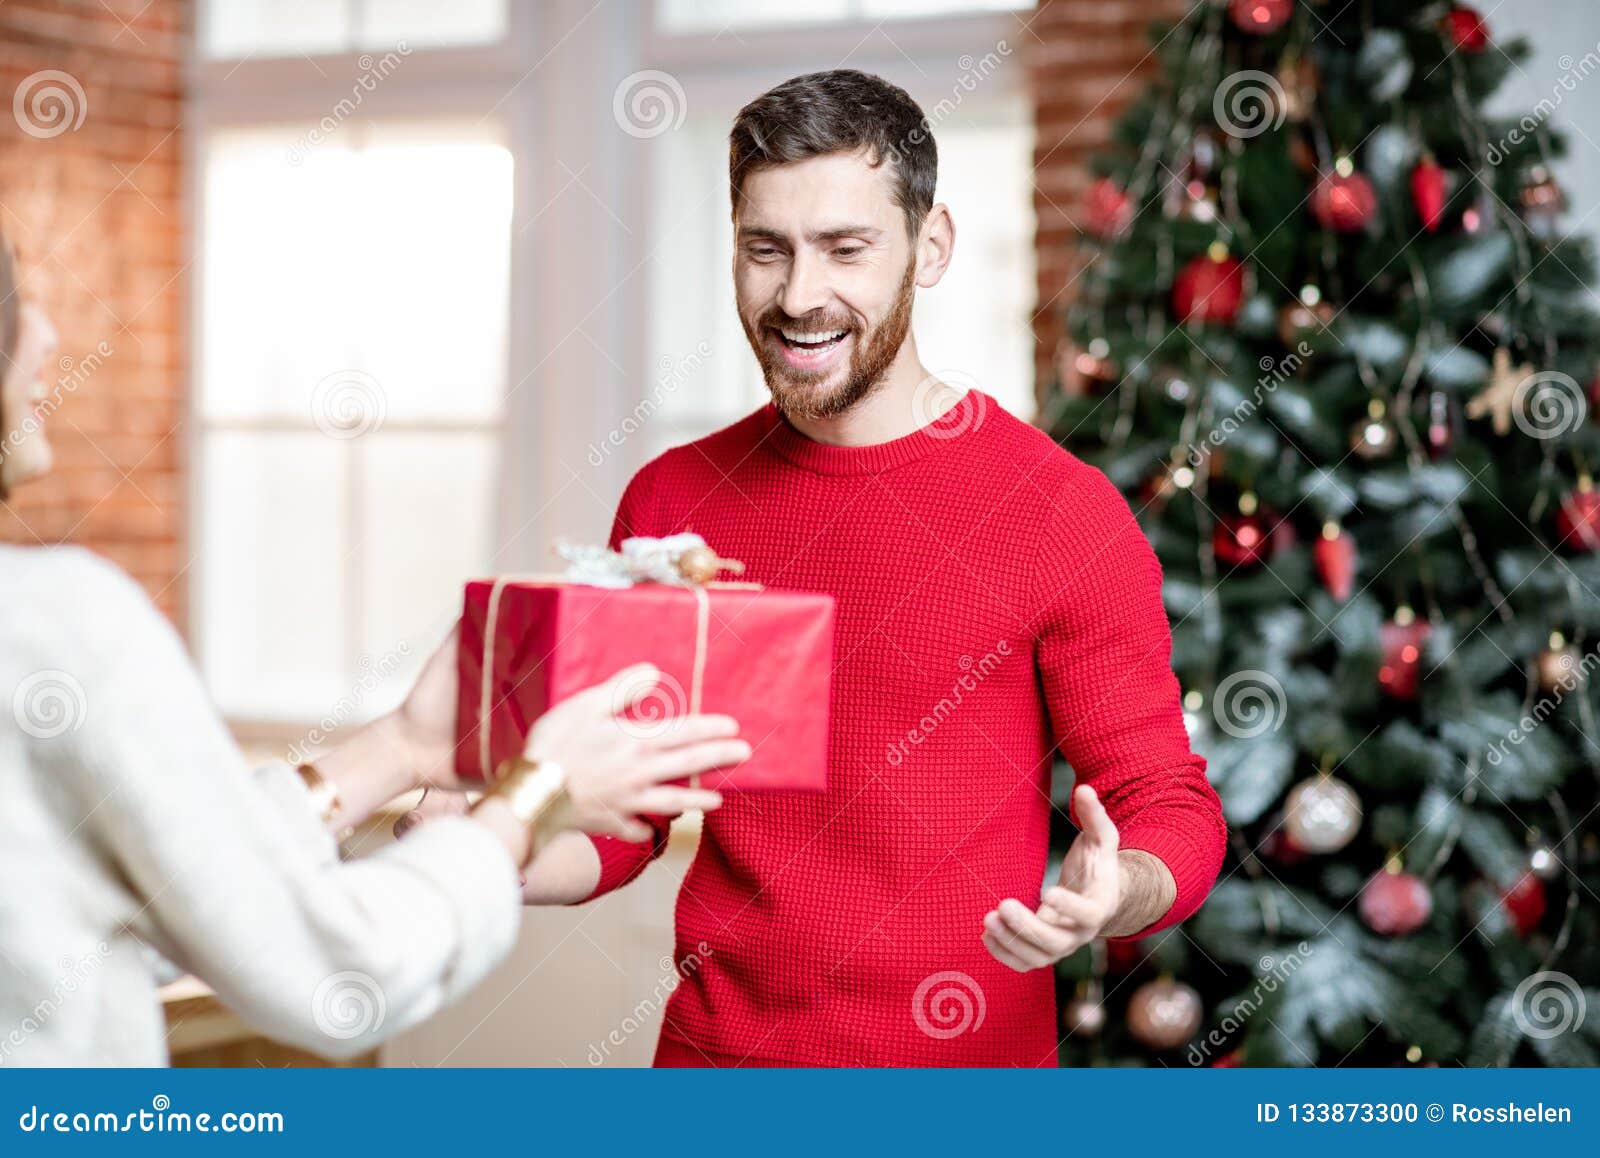 Сон получить подарок от мужчины. Мужчина получает подарок. Receive a Gift. The man gives a Gift. The boy received a Gift.